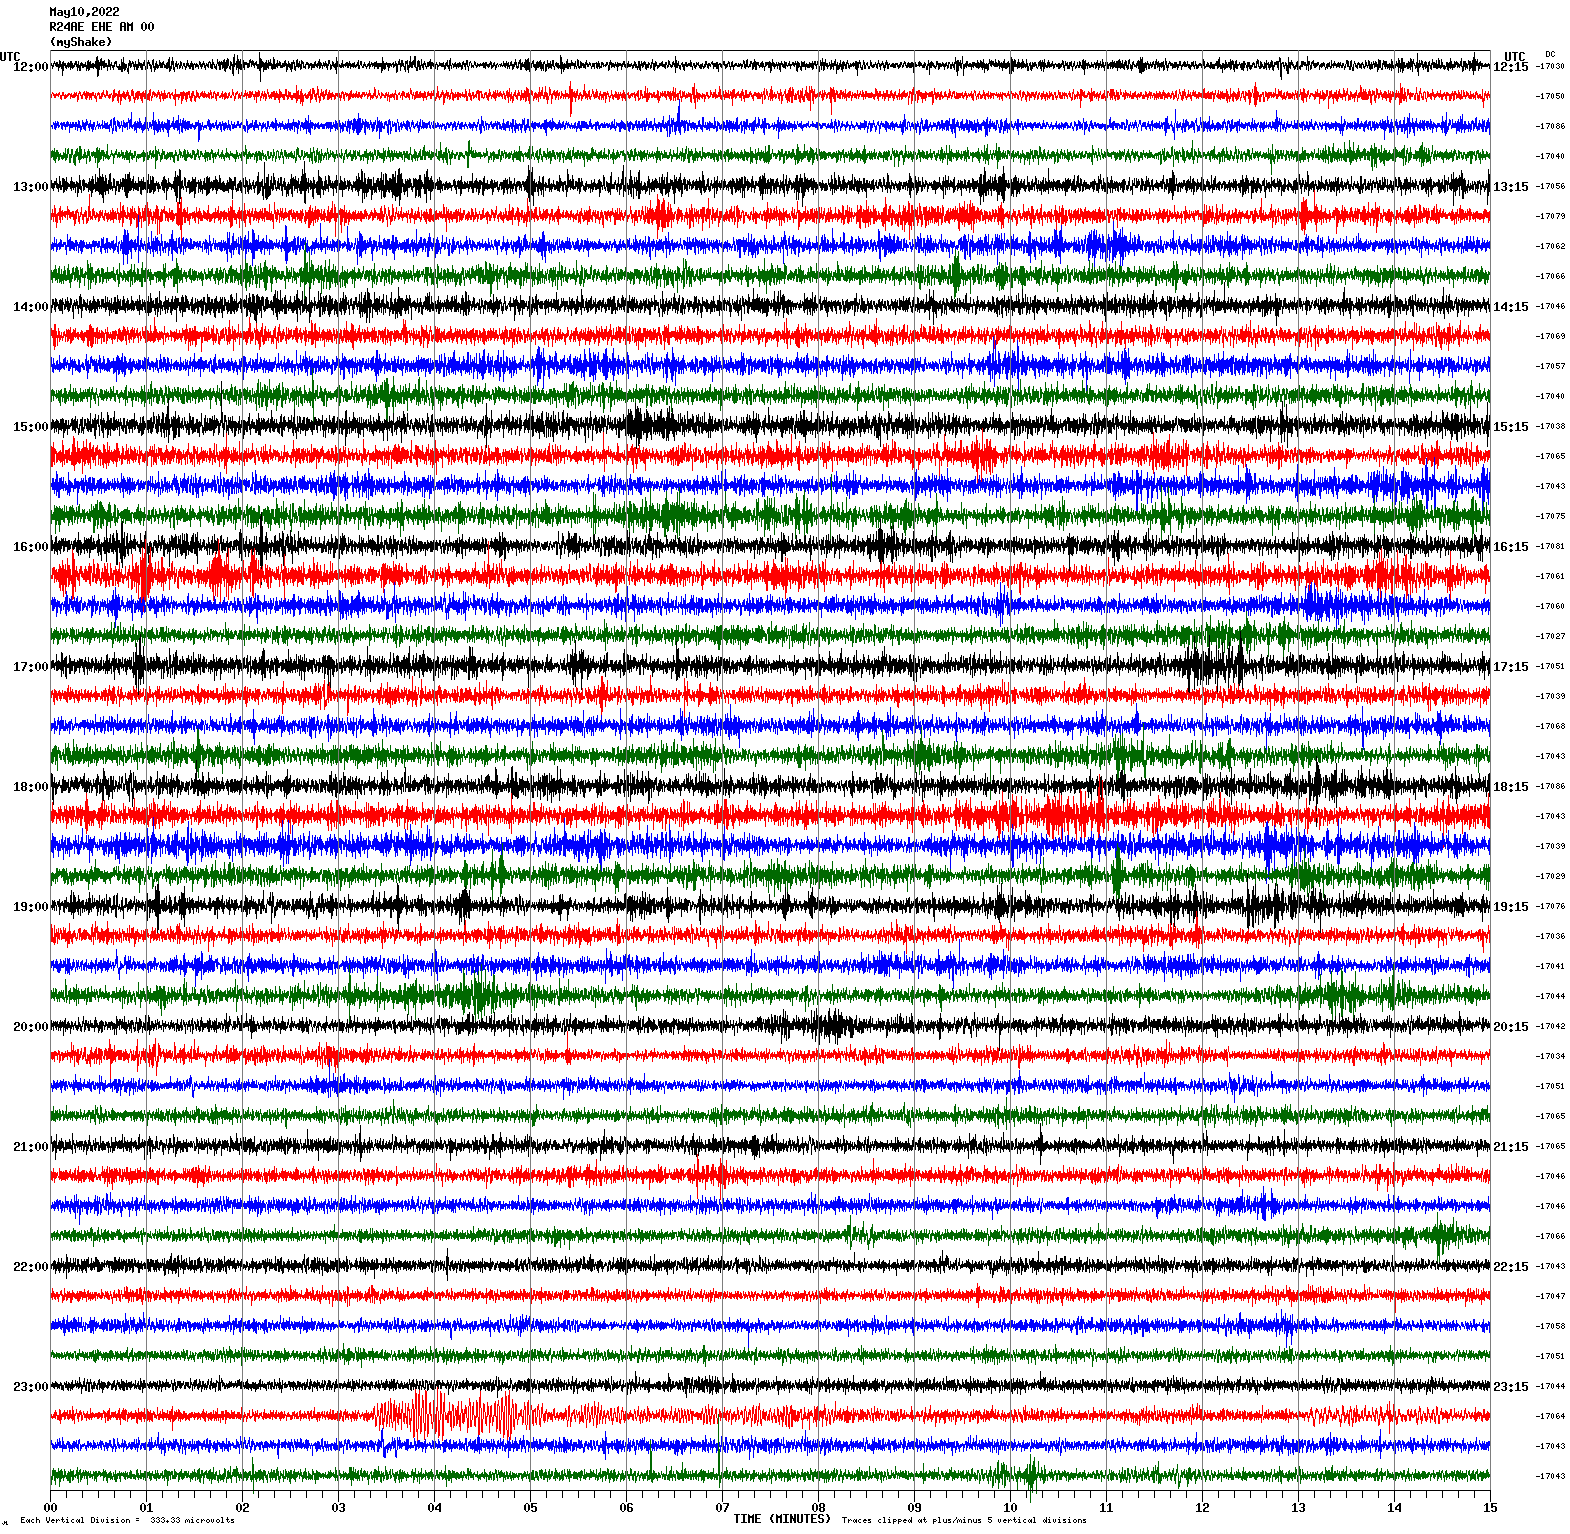 /seismic-data/R24AE/R24AE_EHE_AM_00.2022051012.gif